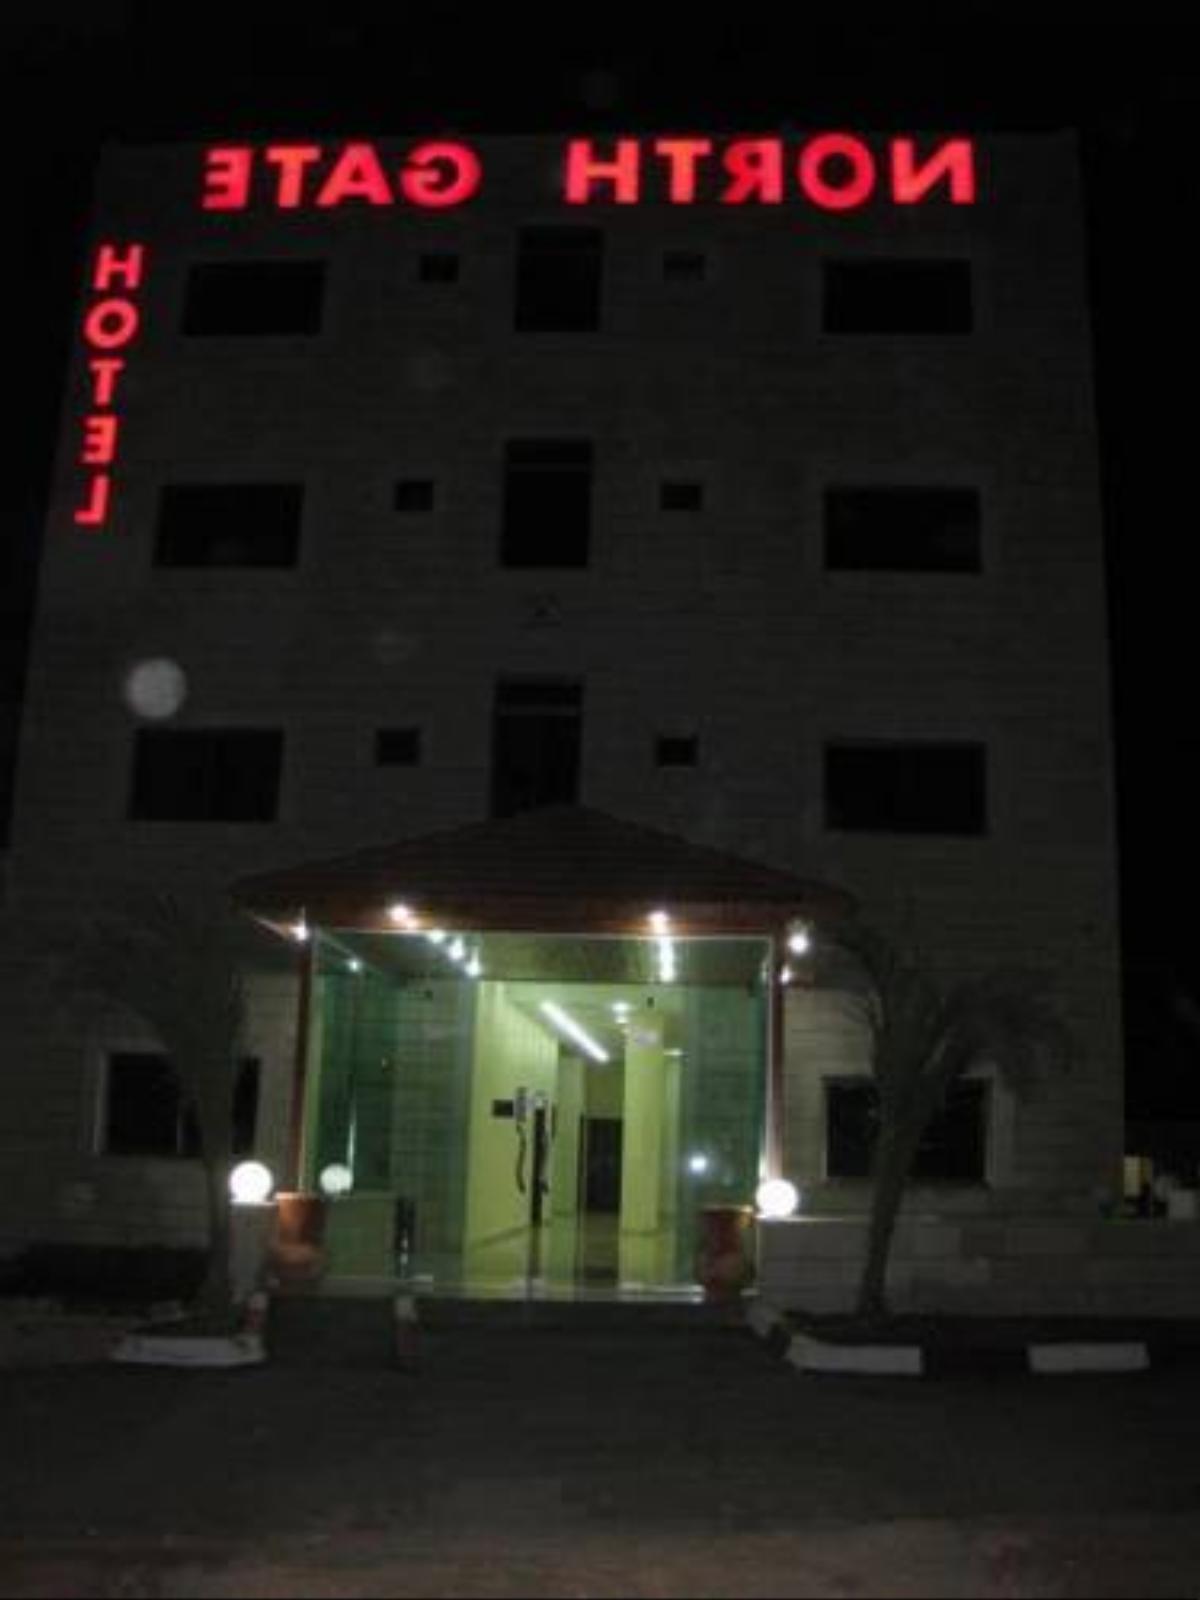 North Gate Hotel